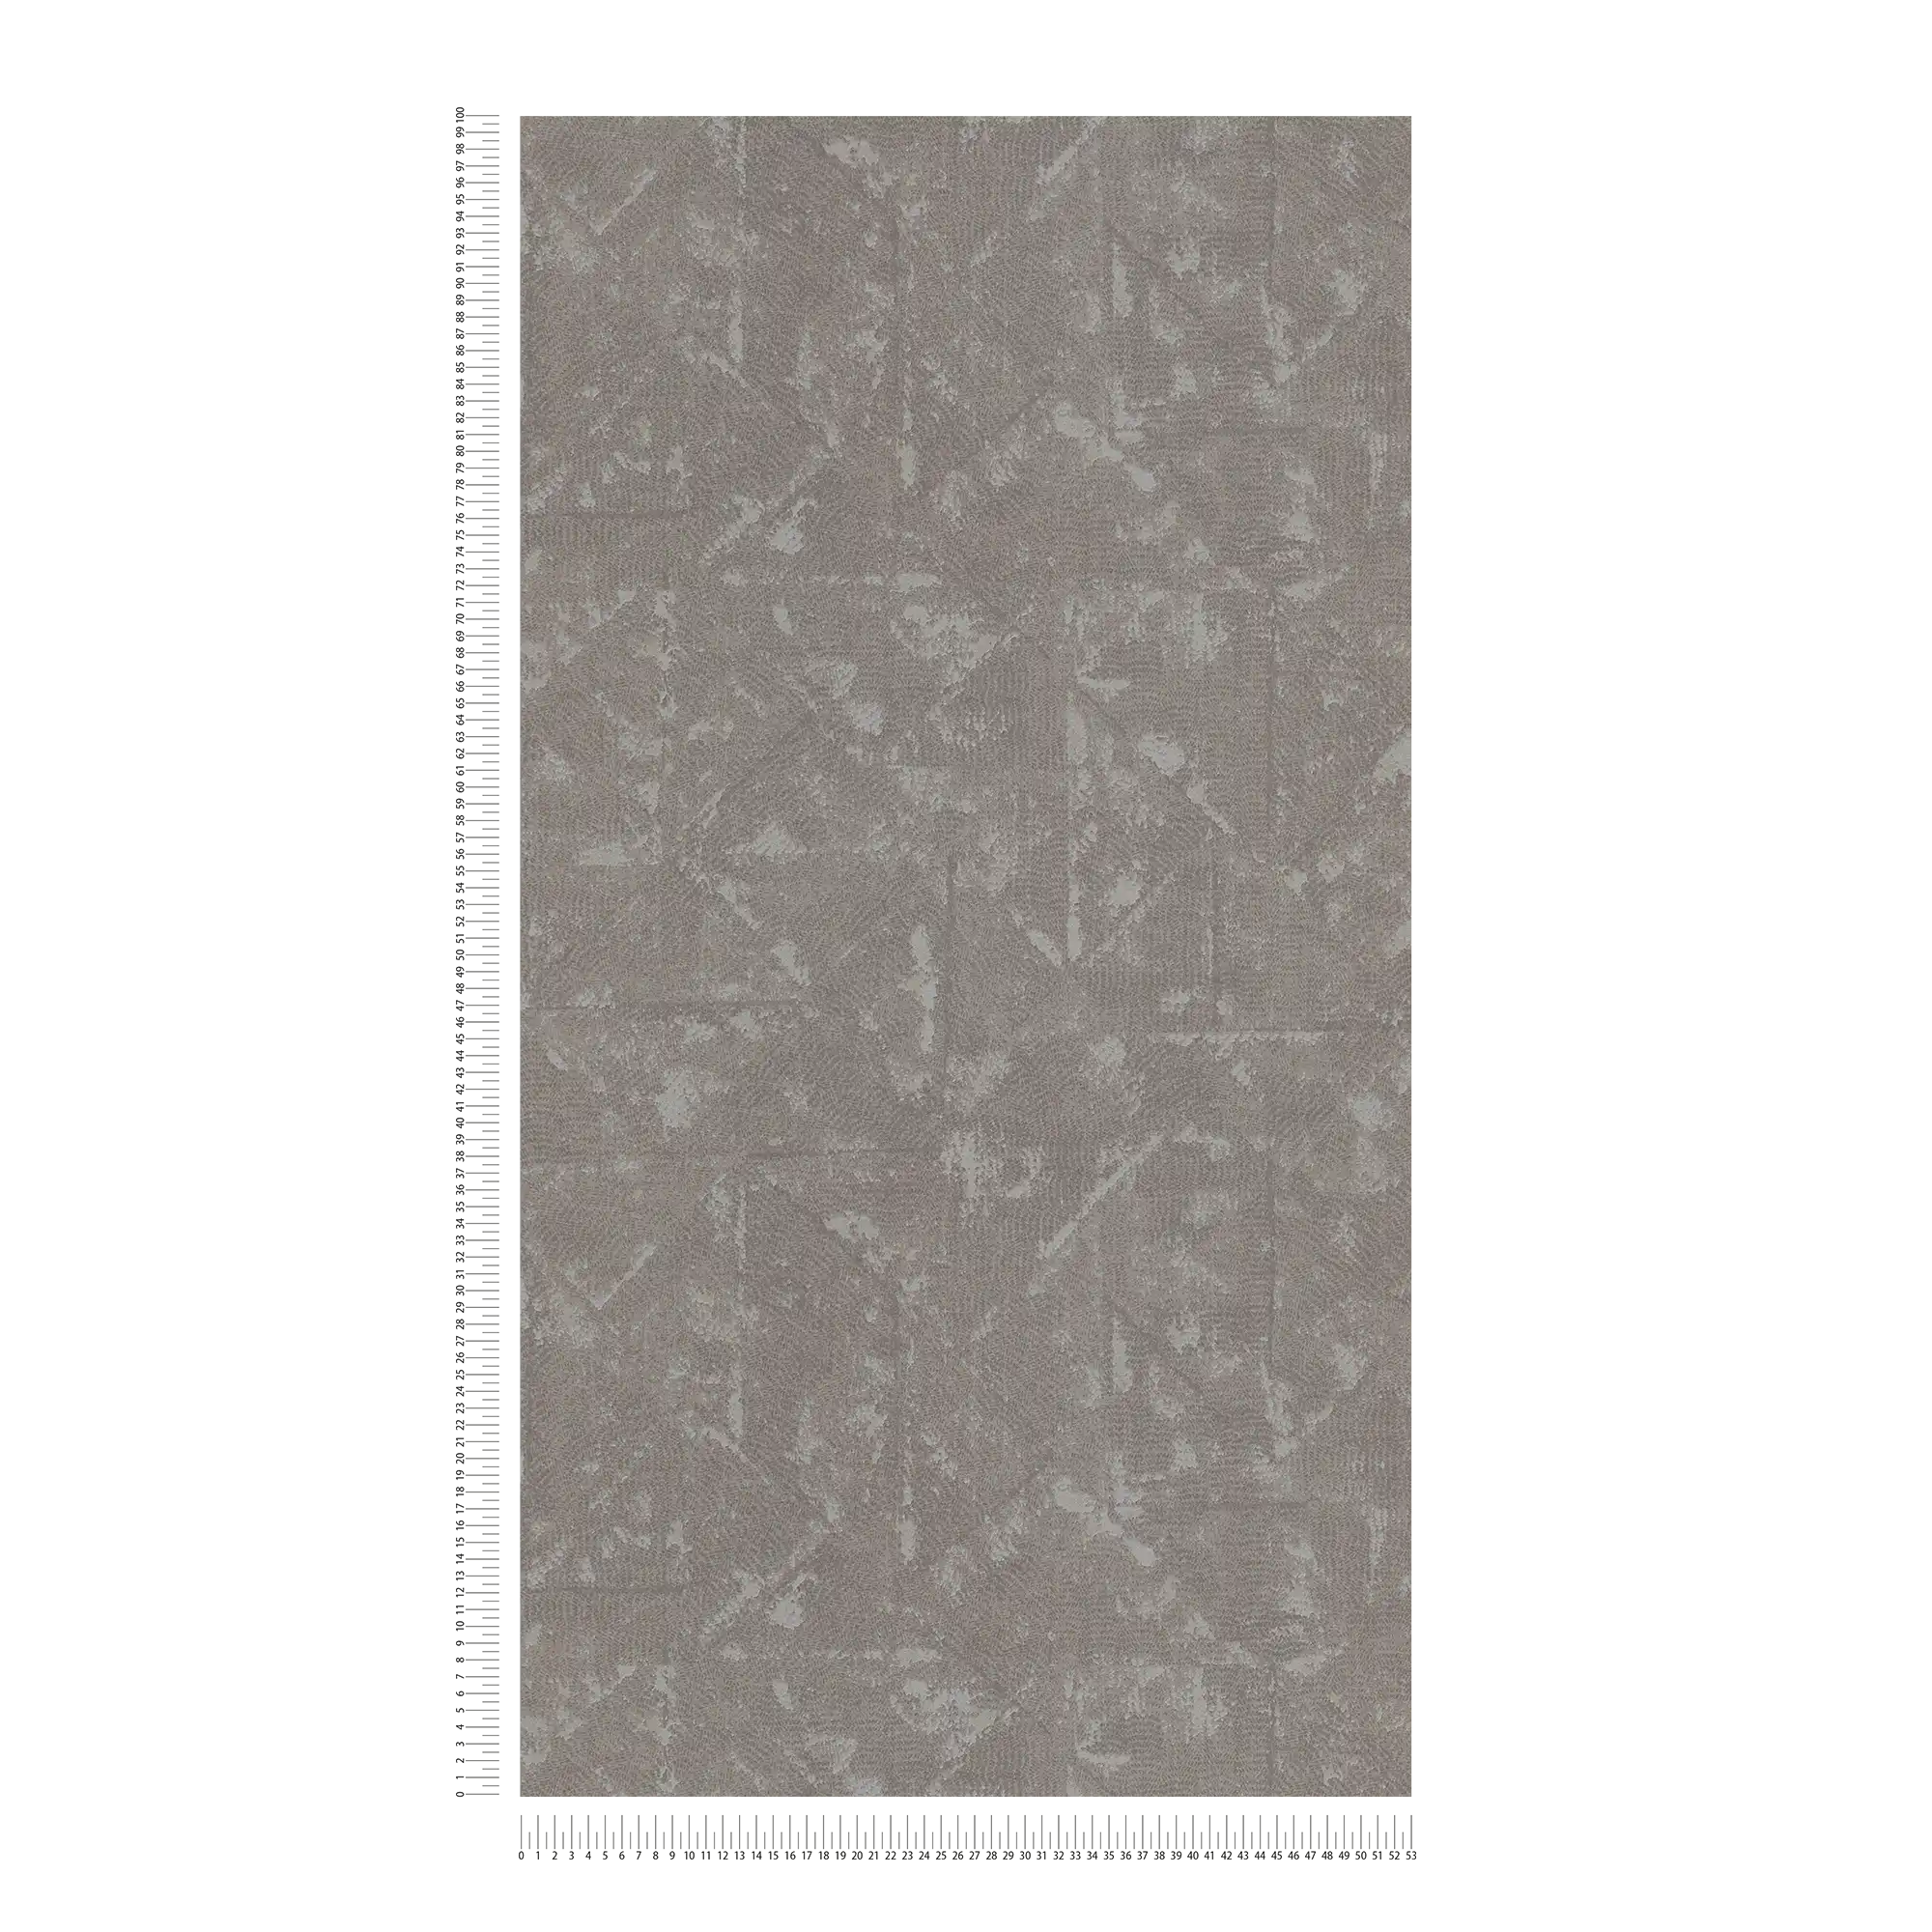             Unifarbene Vliestapete in Grau, asymmetrische Details – Grau, Silber
        